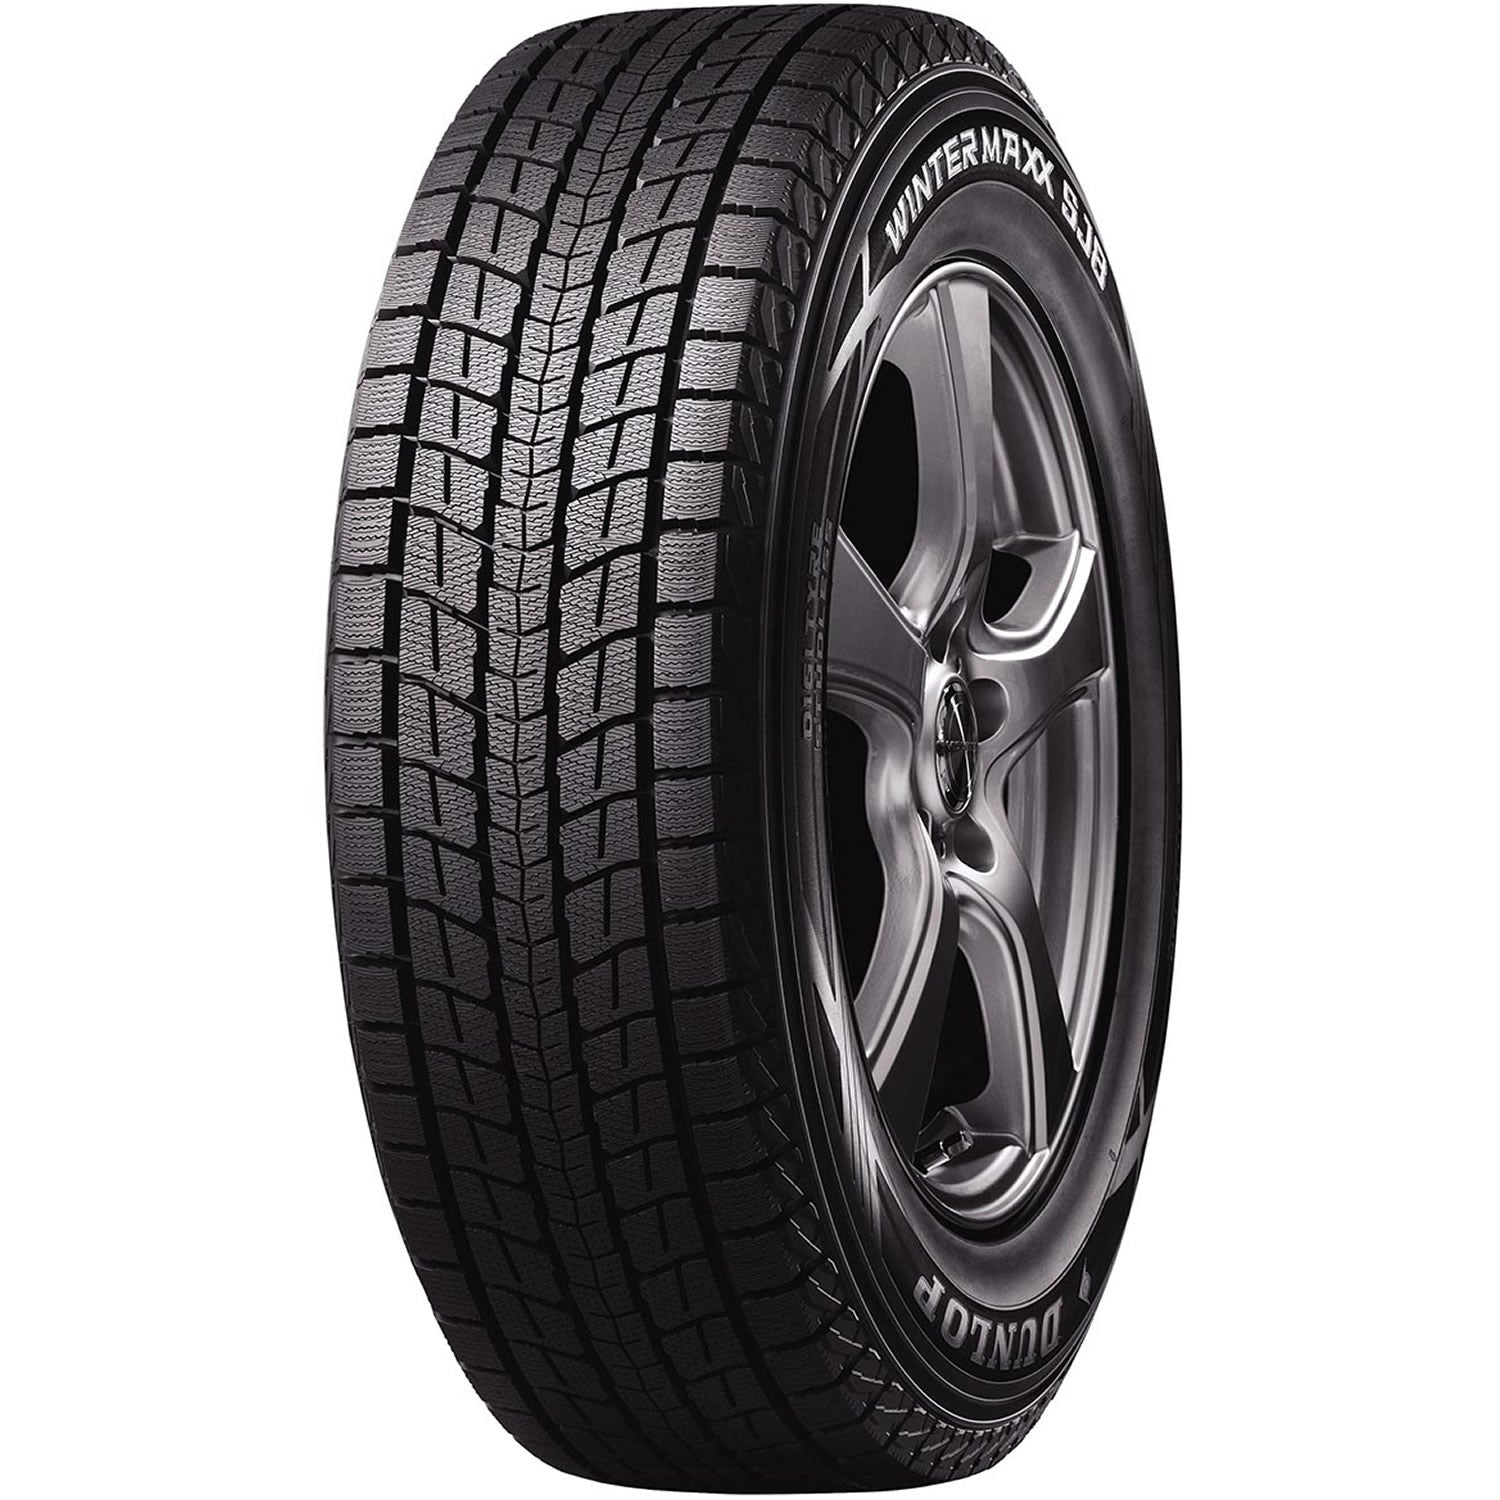 DUNLOP WINTER MAXX SJ8 225/70R16 (28.4X8.9R 16) Tires